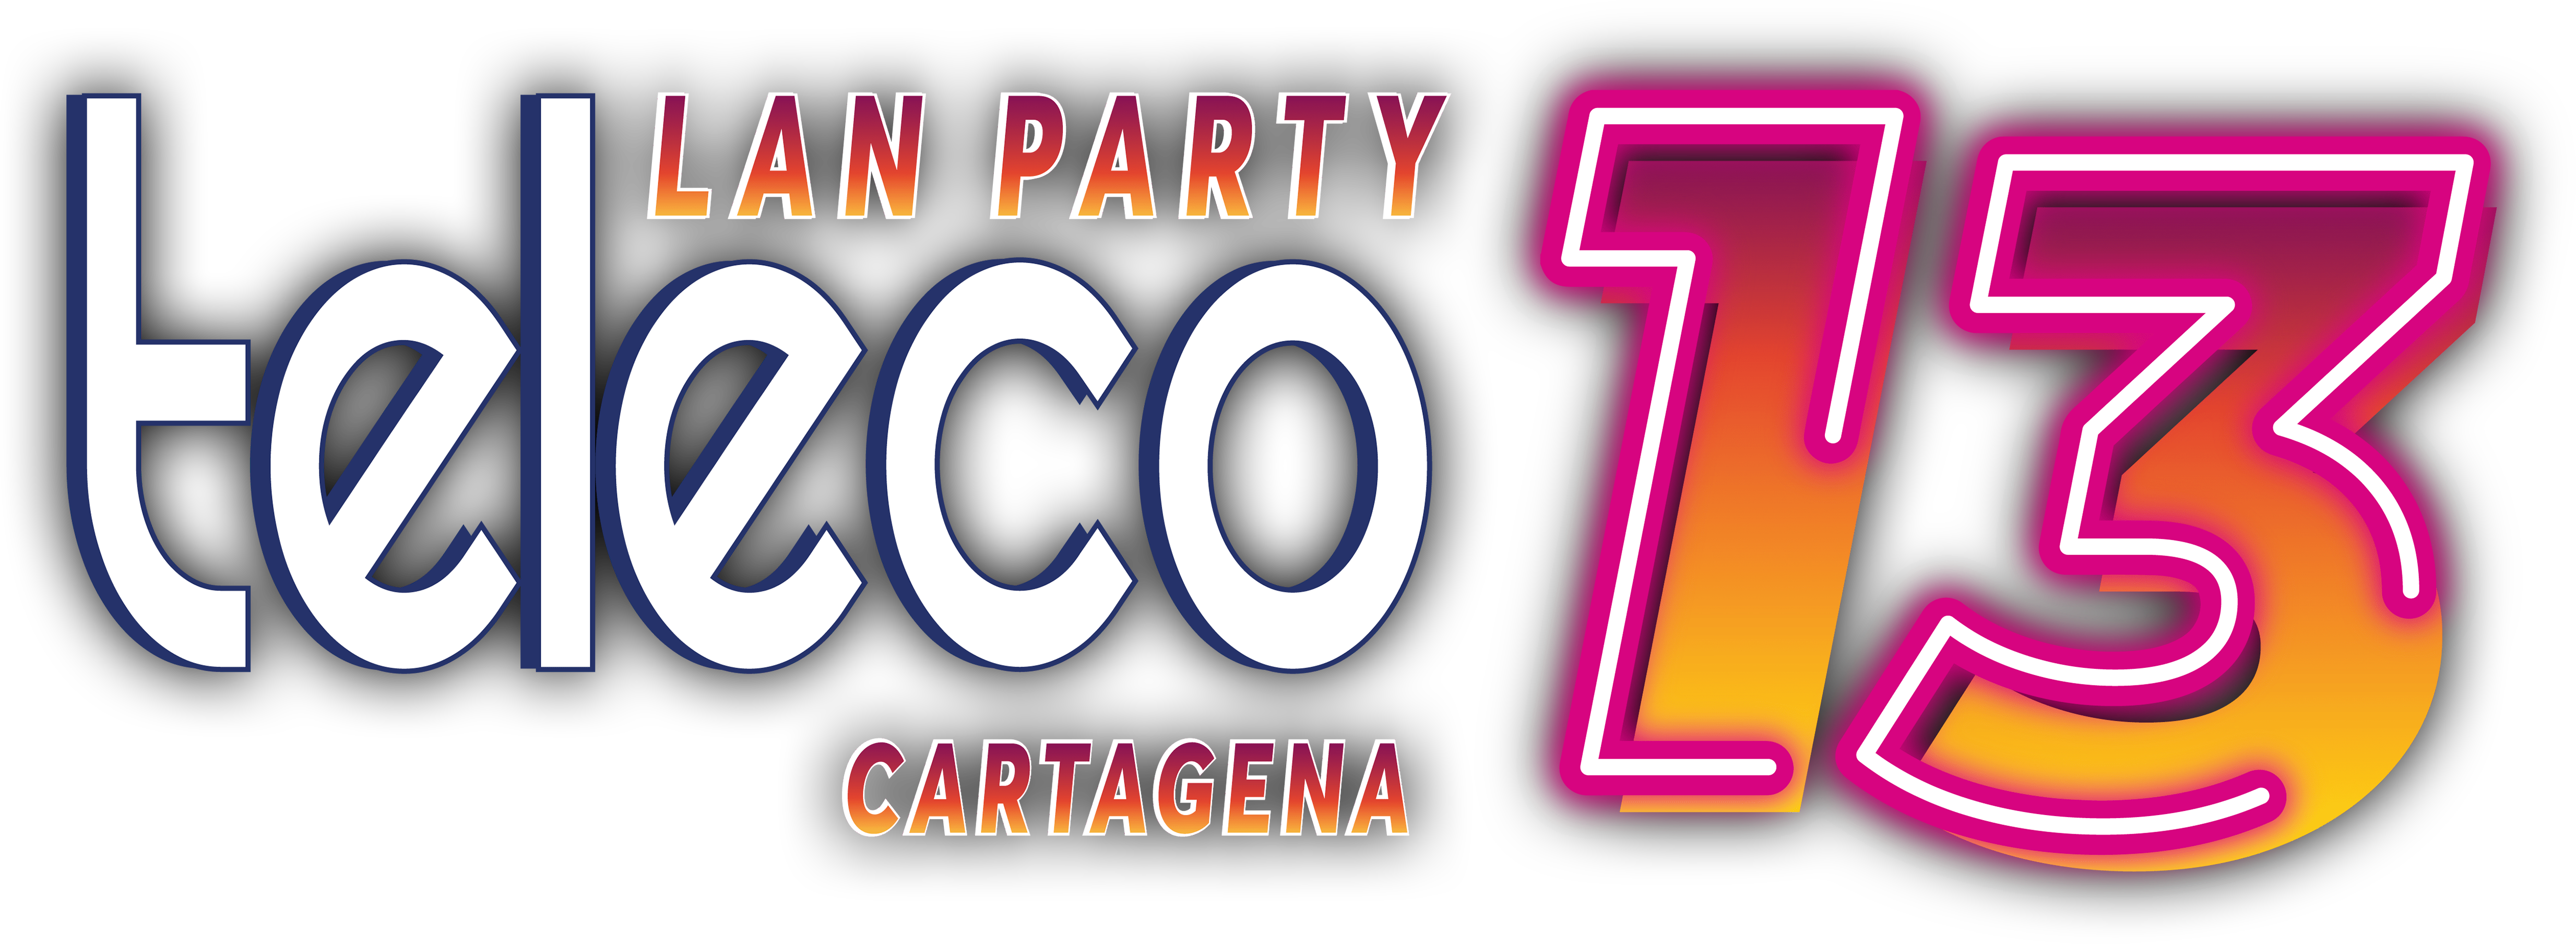 Logotipo Teleco LAN Party 13 Cartagena